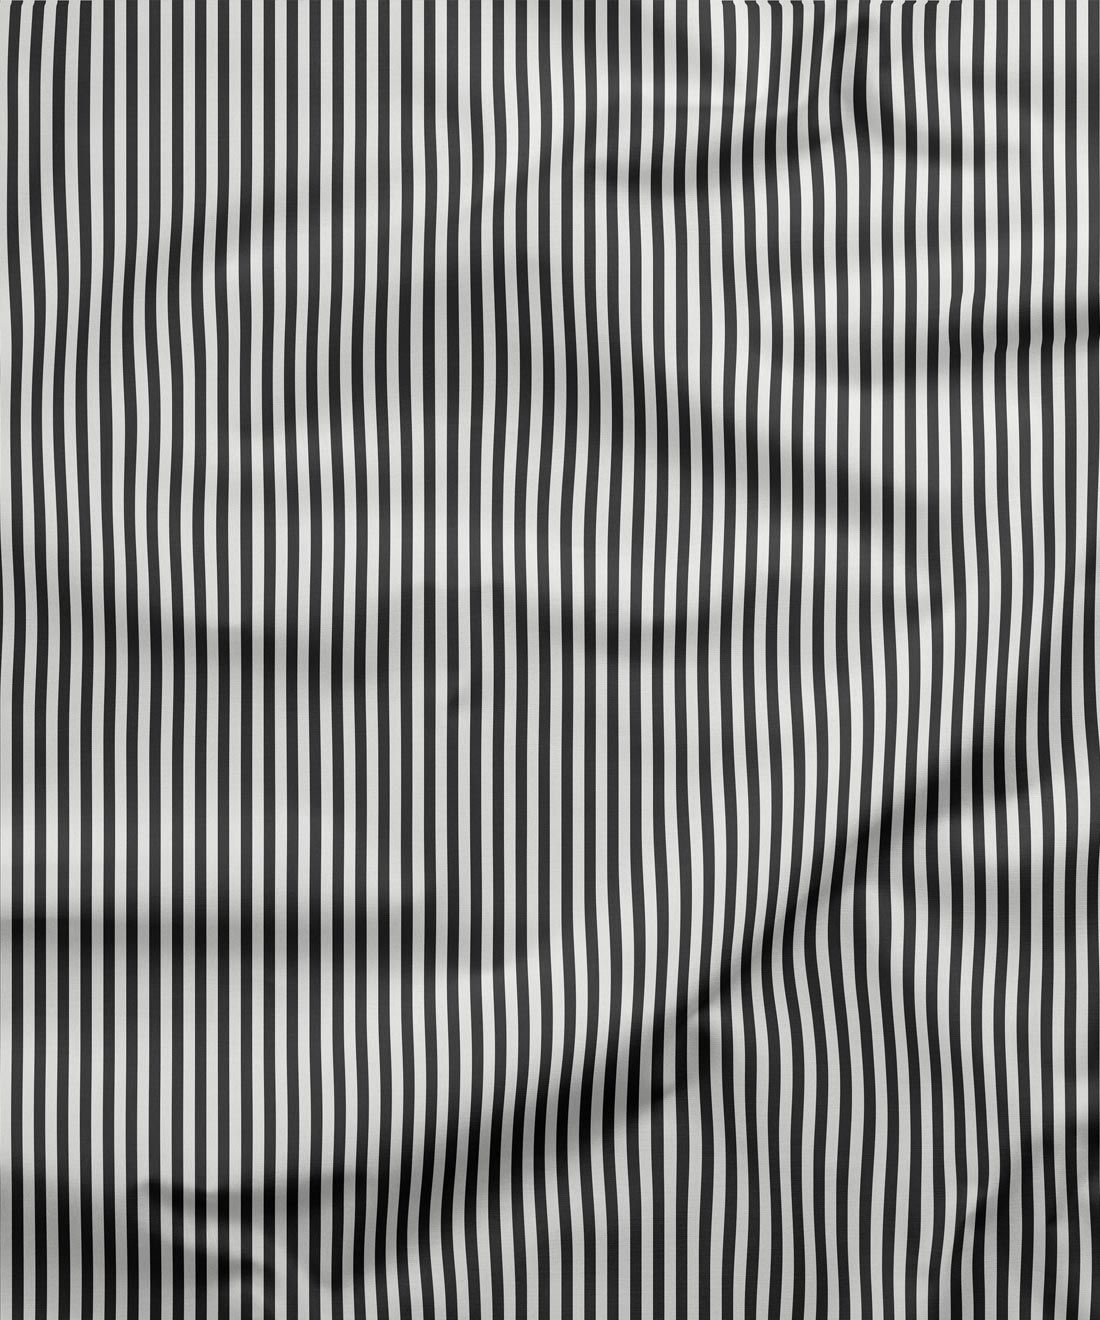 Candy Stripe Fabric